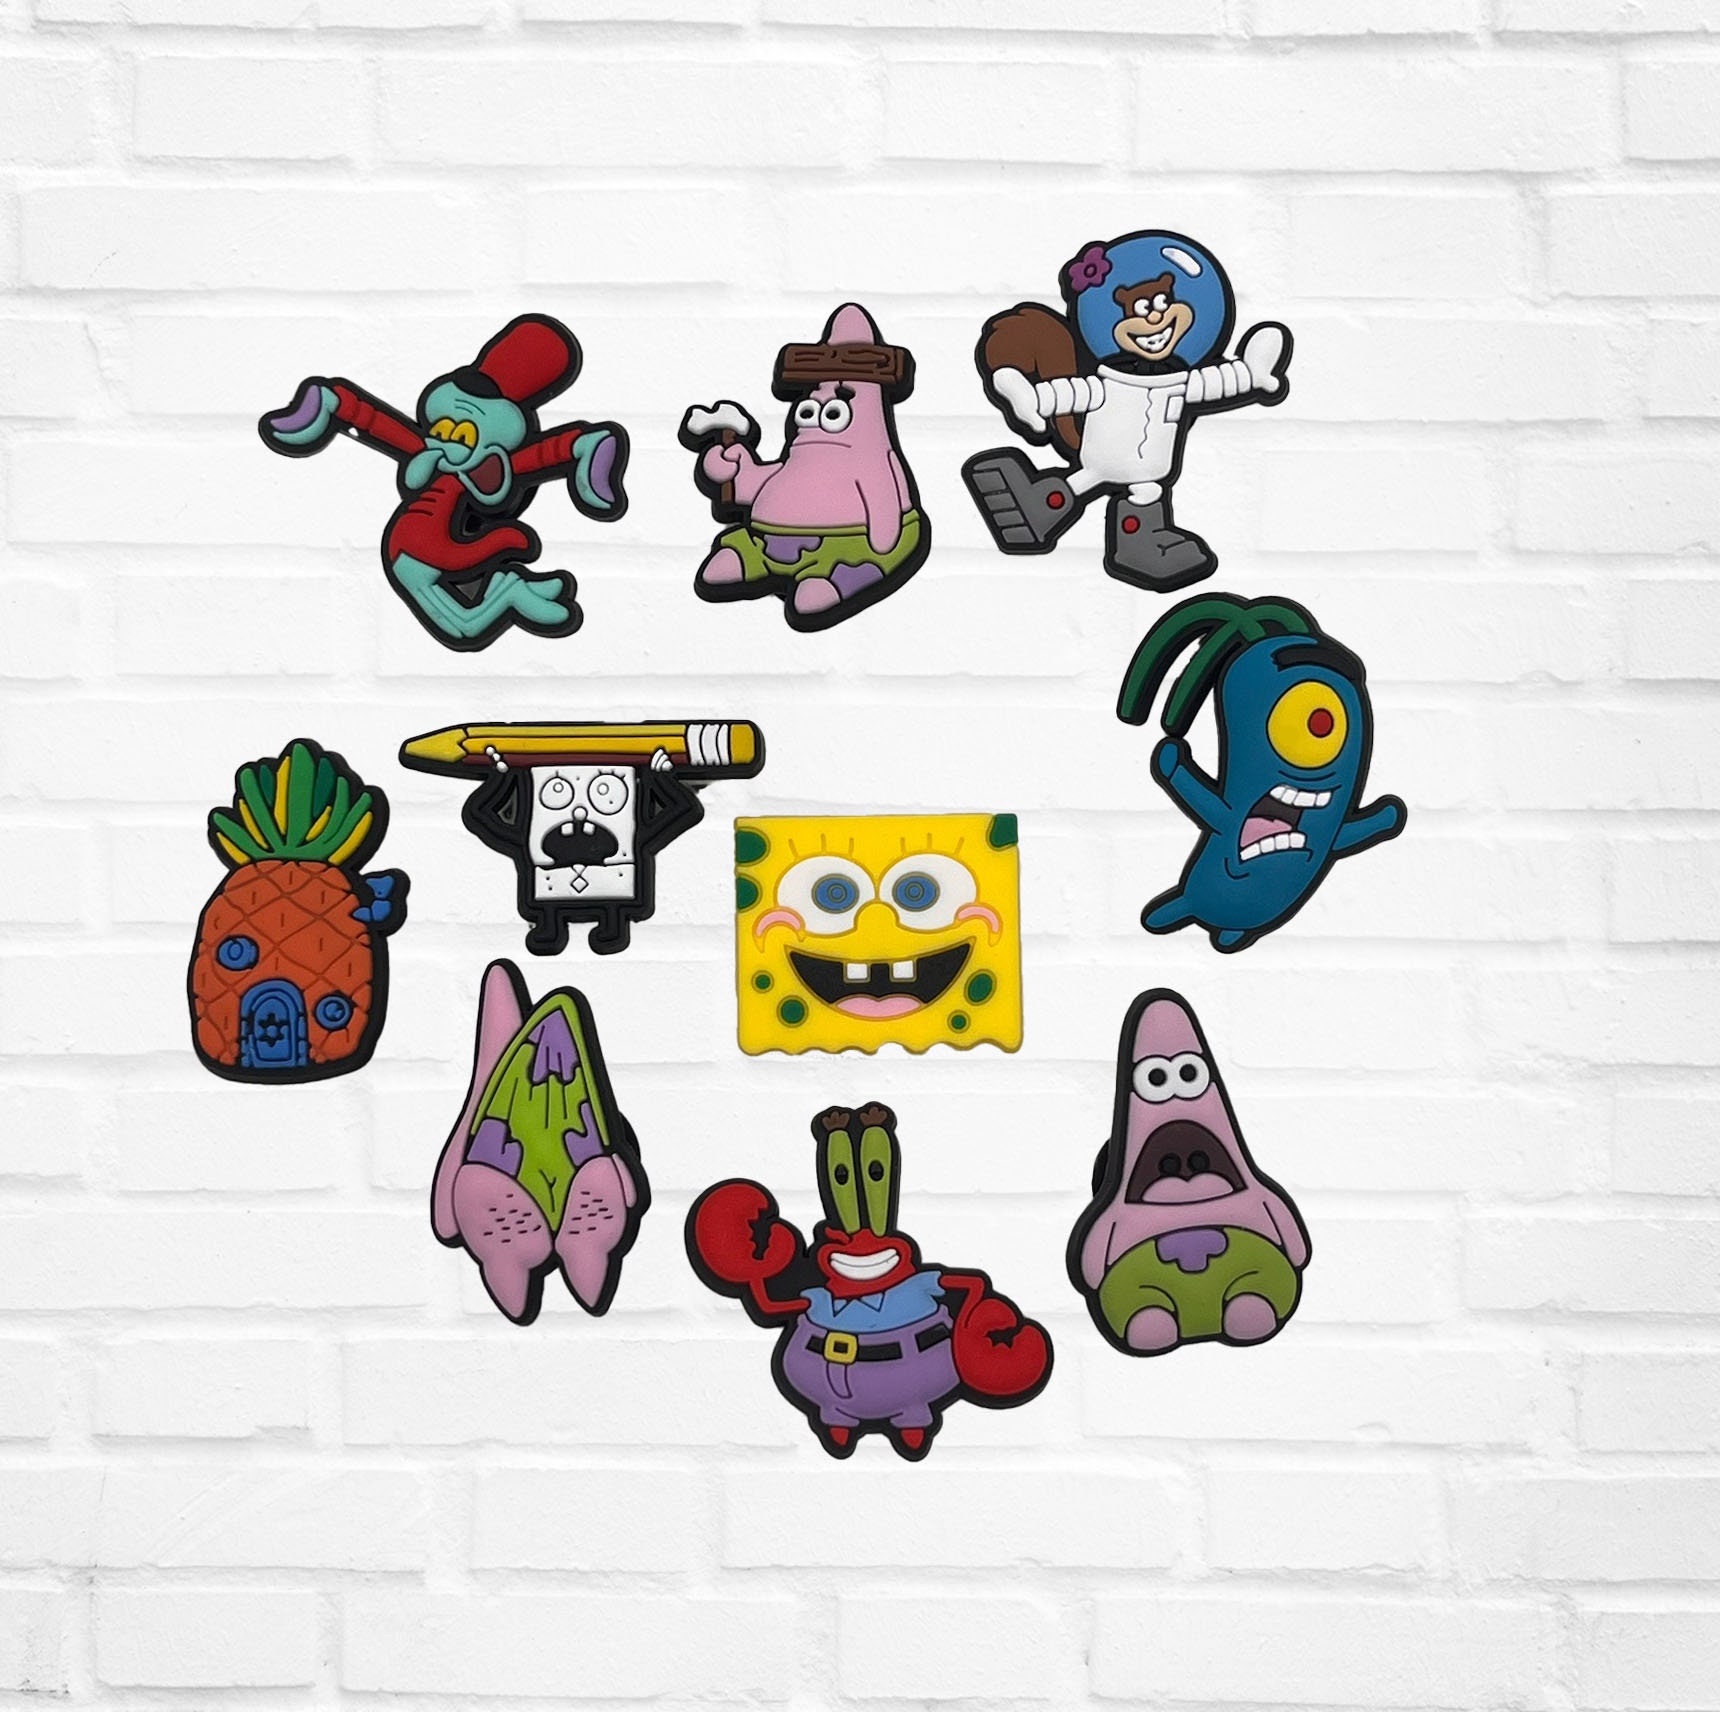 Crocs Jibbitz™ SpongeBob SquarePants™ Shoe Charms 5 Pack - Multicolor